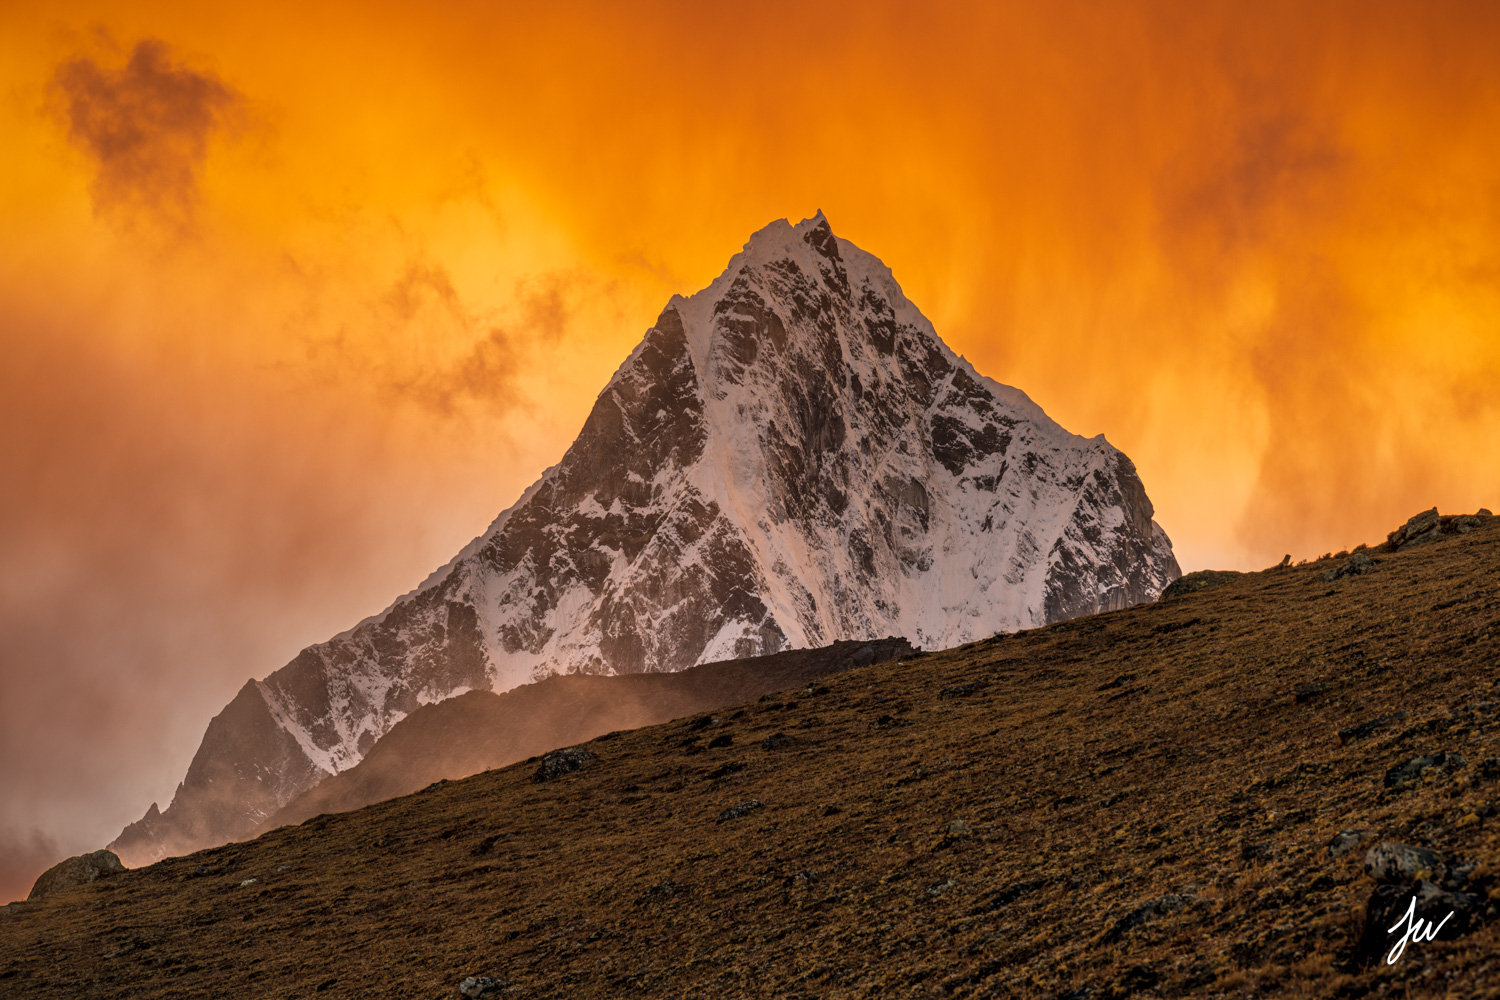 Cholatse sunset in the Khumbu in Nepal.